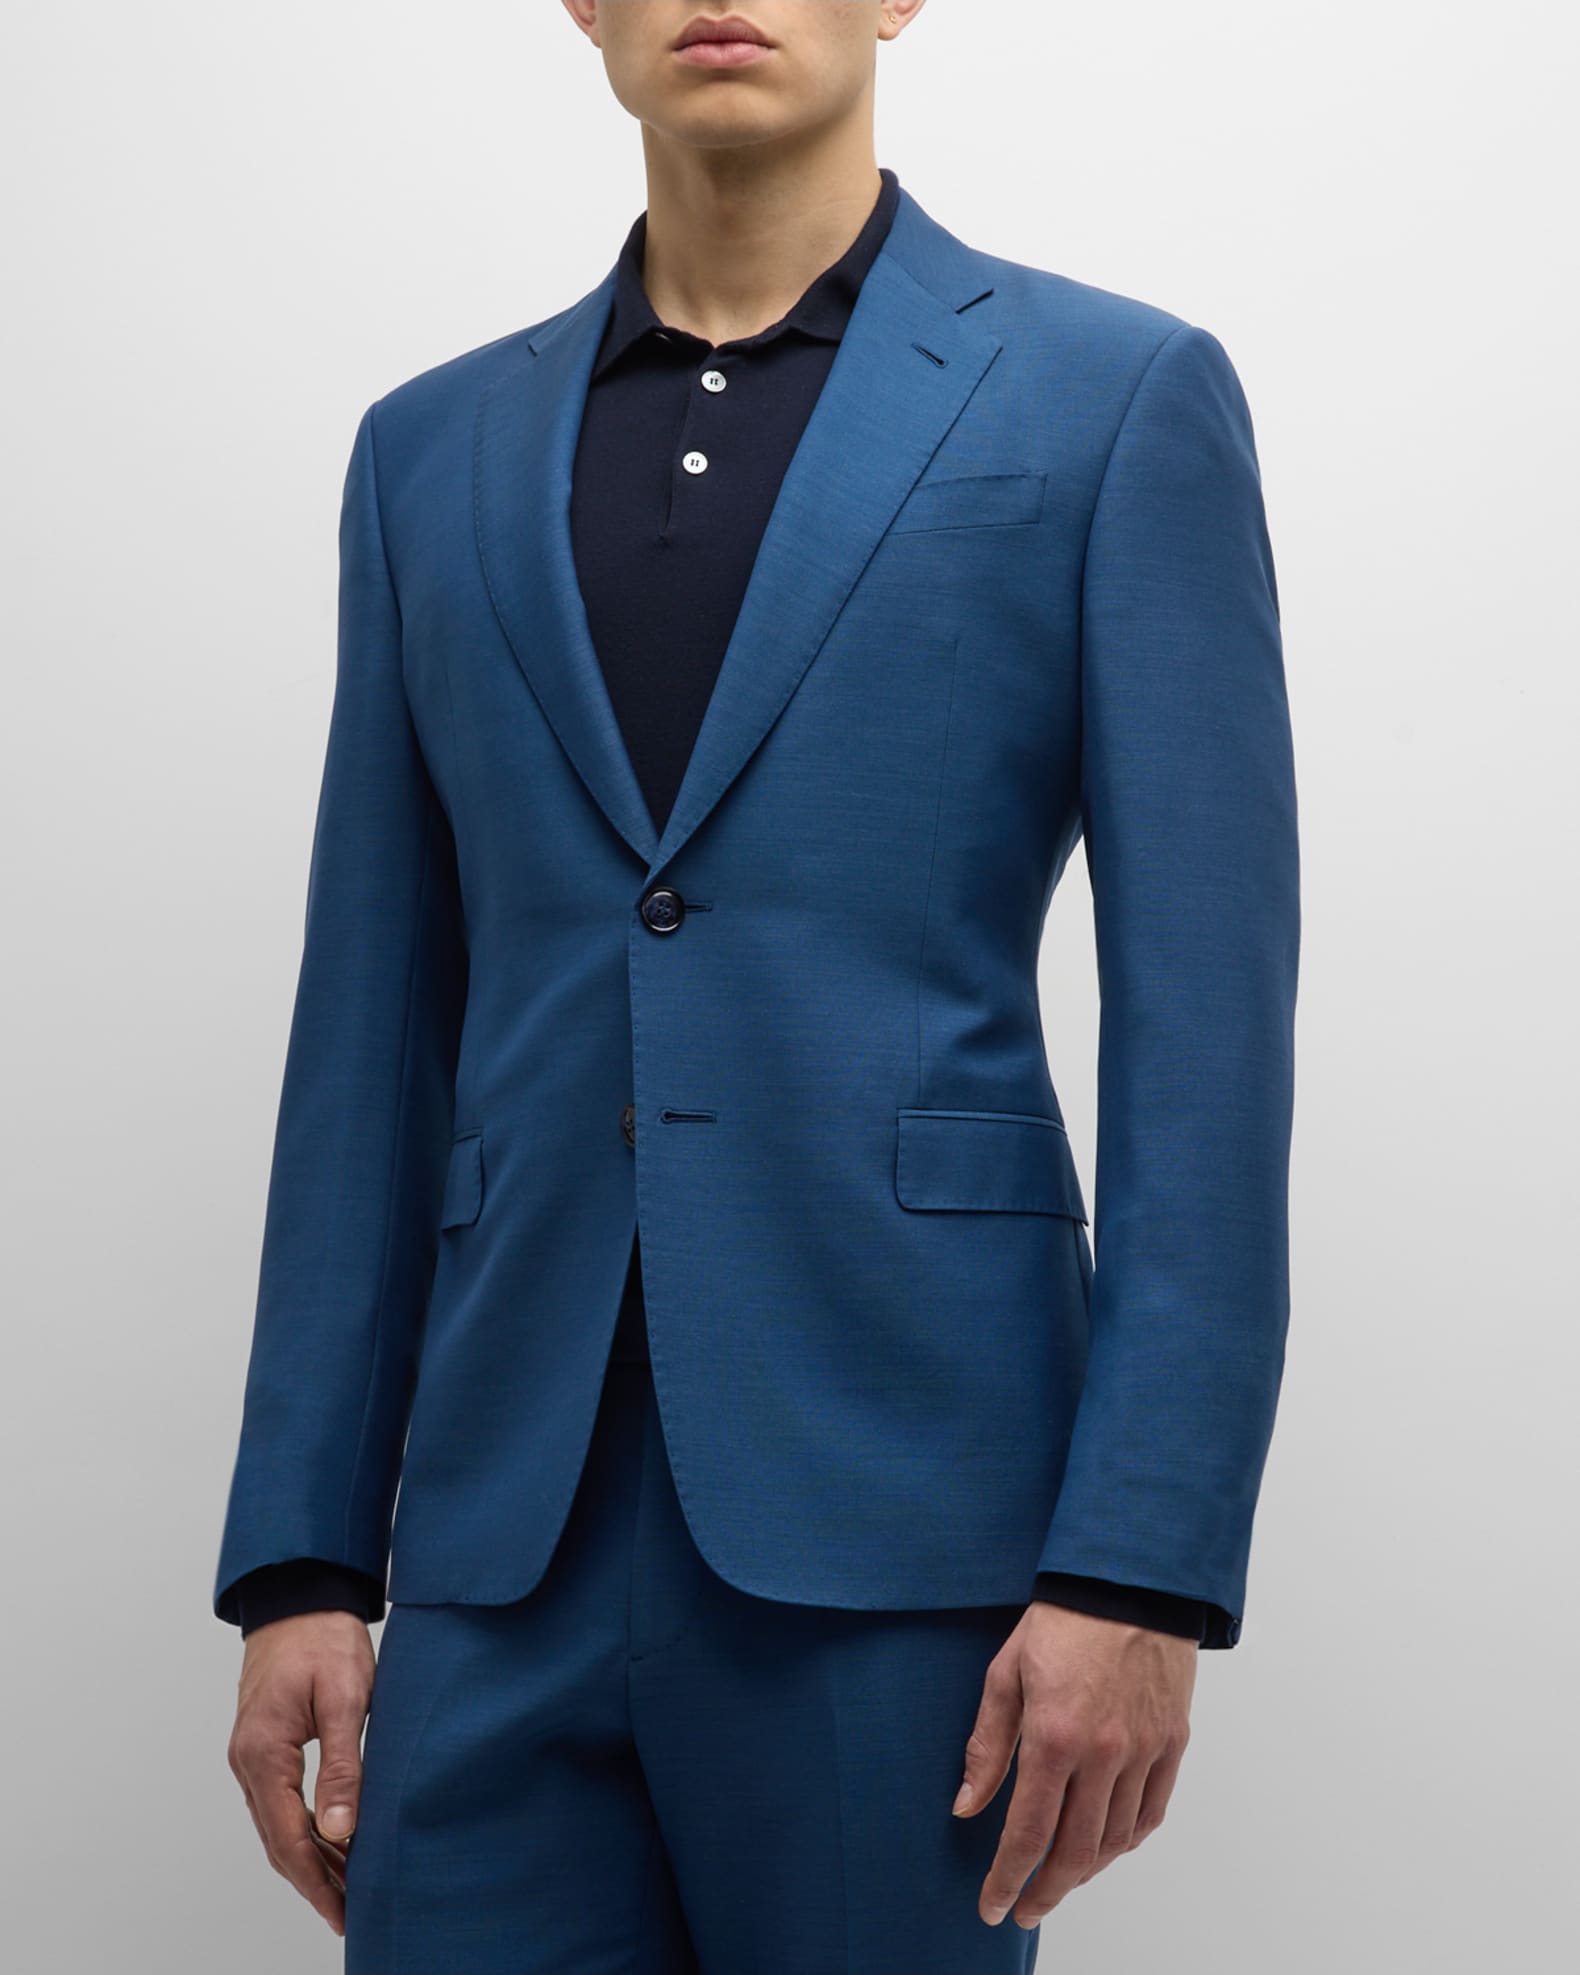 Giorgio Armani Men's Solid Wool-Blend Suit | Neiman Marcus